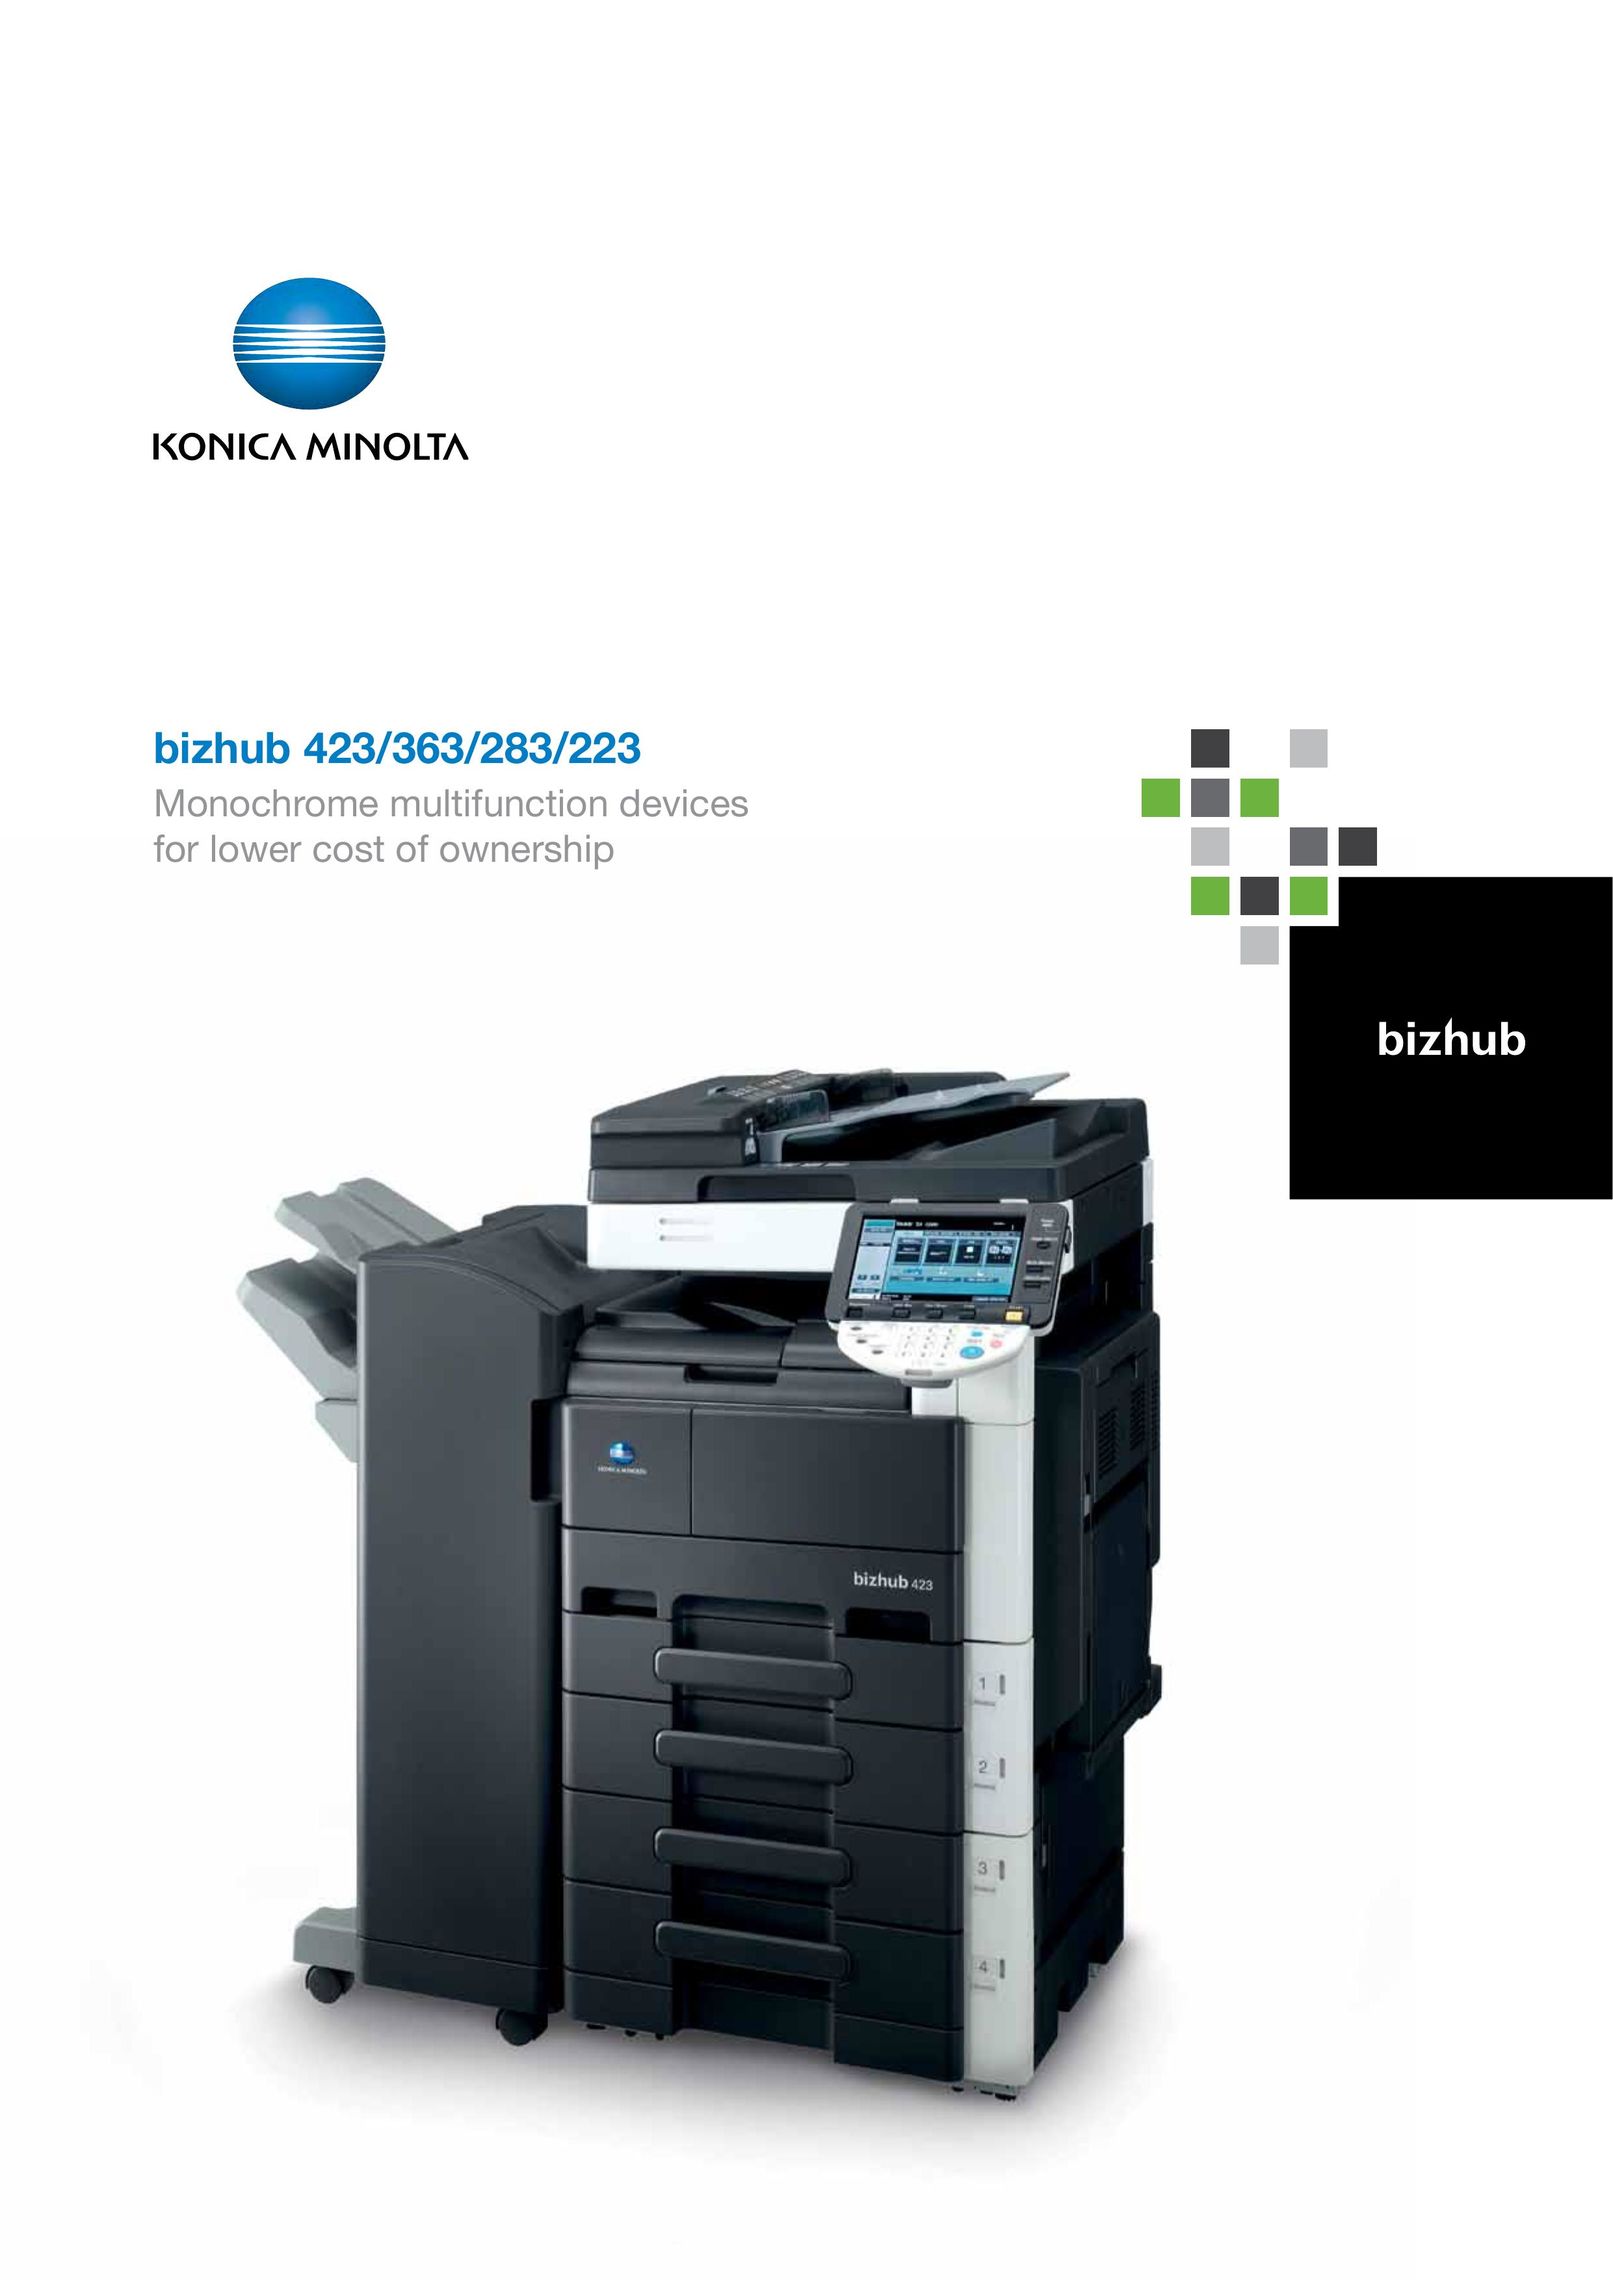 Konica Minolta 363 All in One Printer User Manual